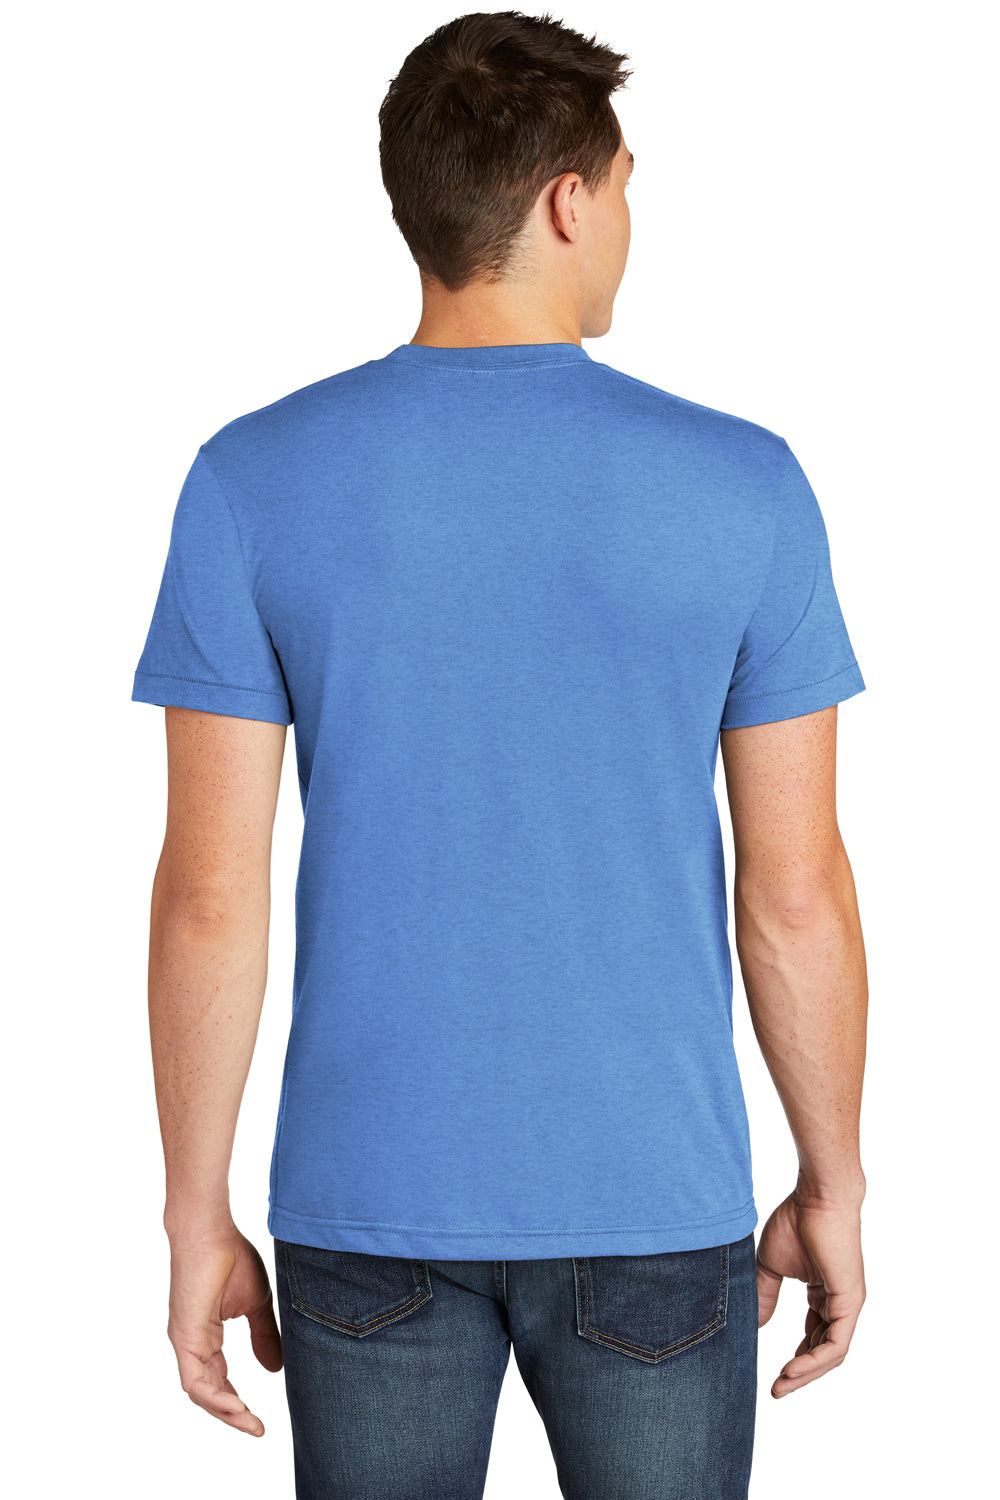 QIPOPIQ Clearance Men's Shirts 4th of July American Tees Crew Neck Pullover  T Shirt Short Sleeve Tee Shirts Dark Blue M 